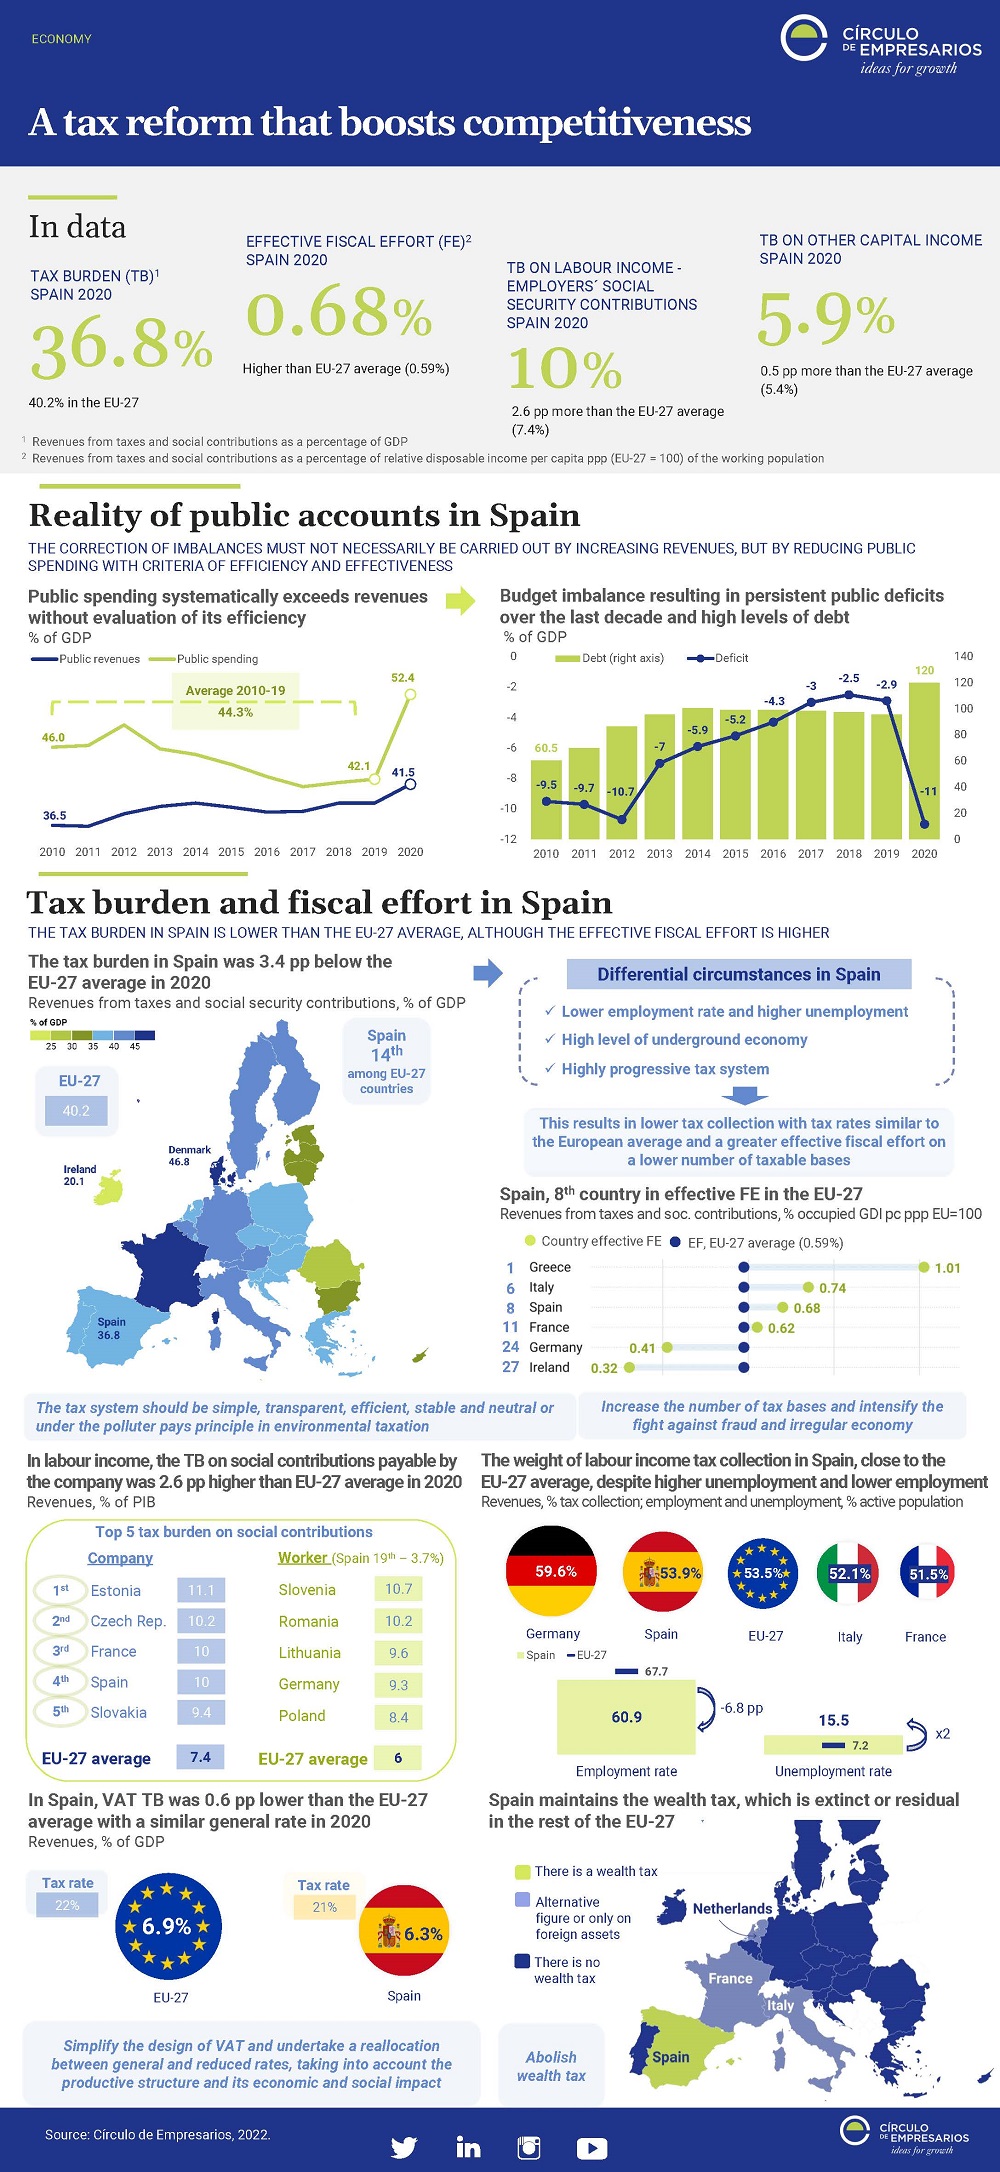 A-tax-reform-that-boosts-competitiveness-March-2022-Circulo-de-Empresarios-infographic